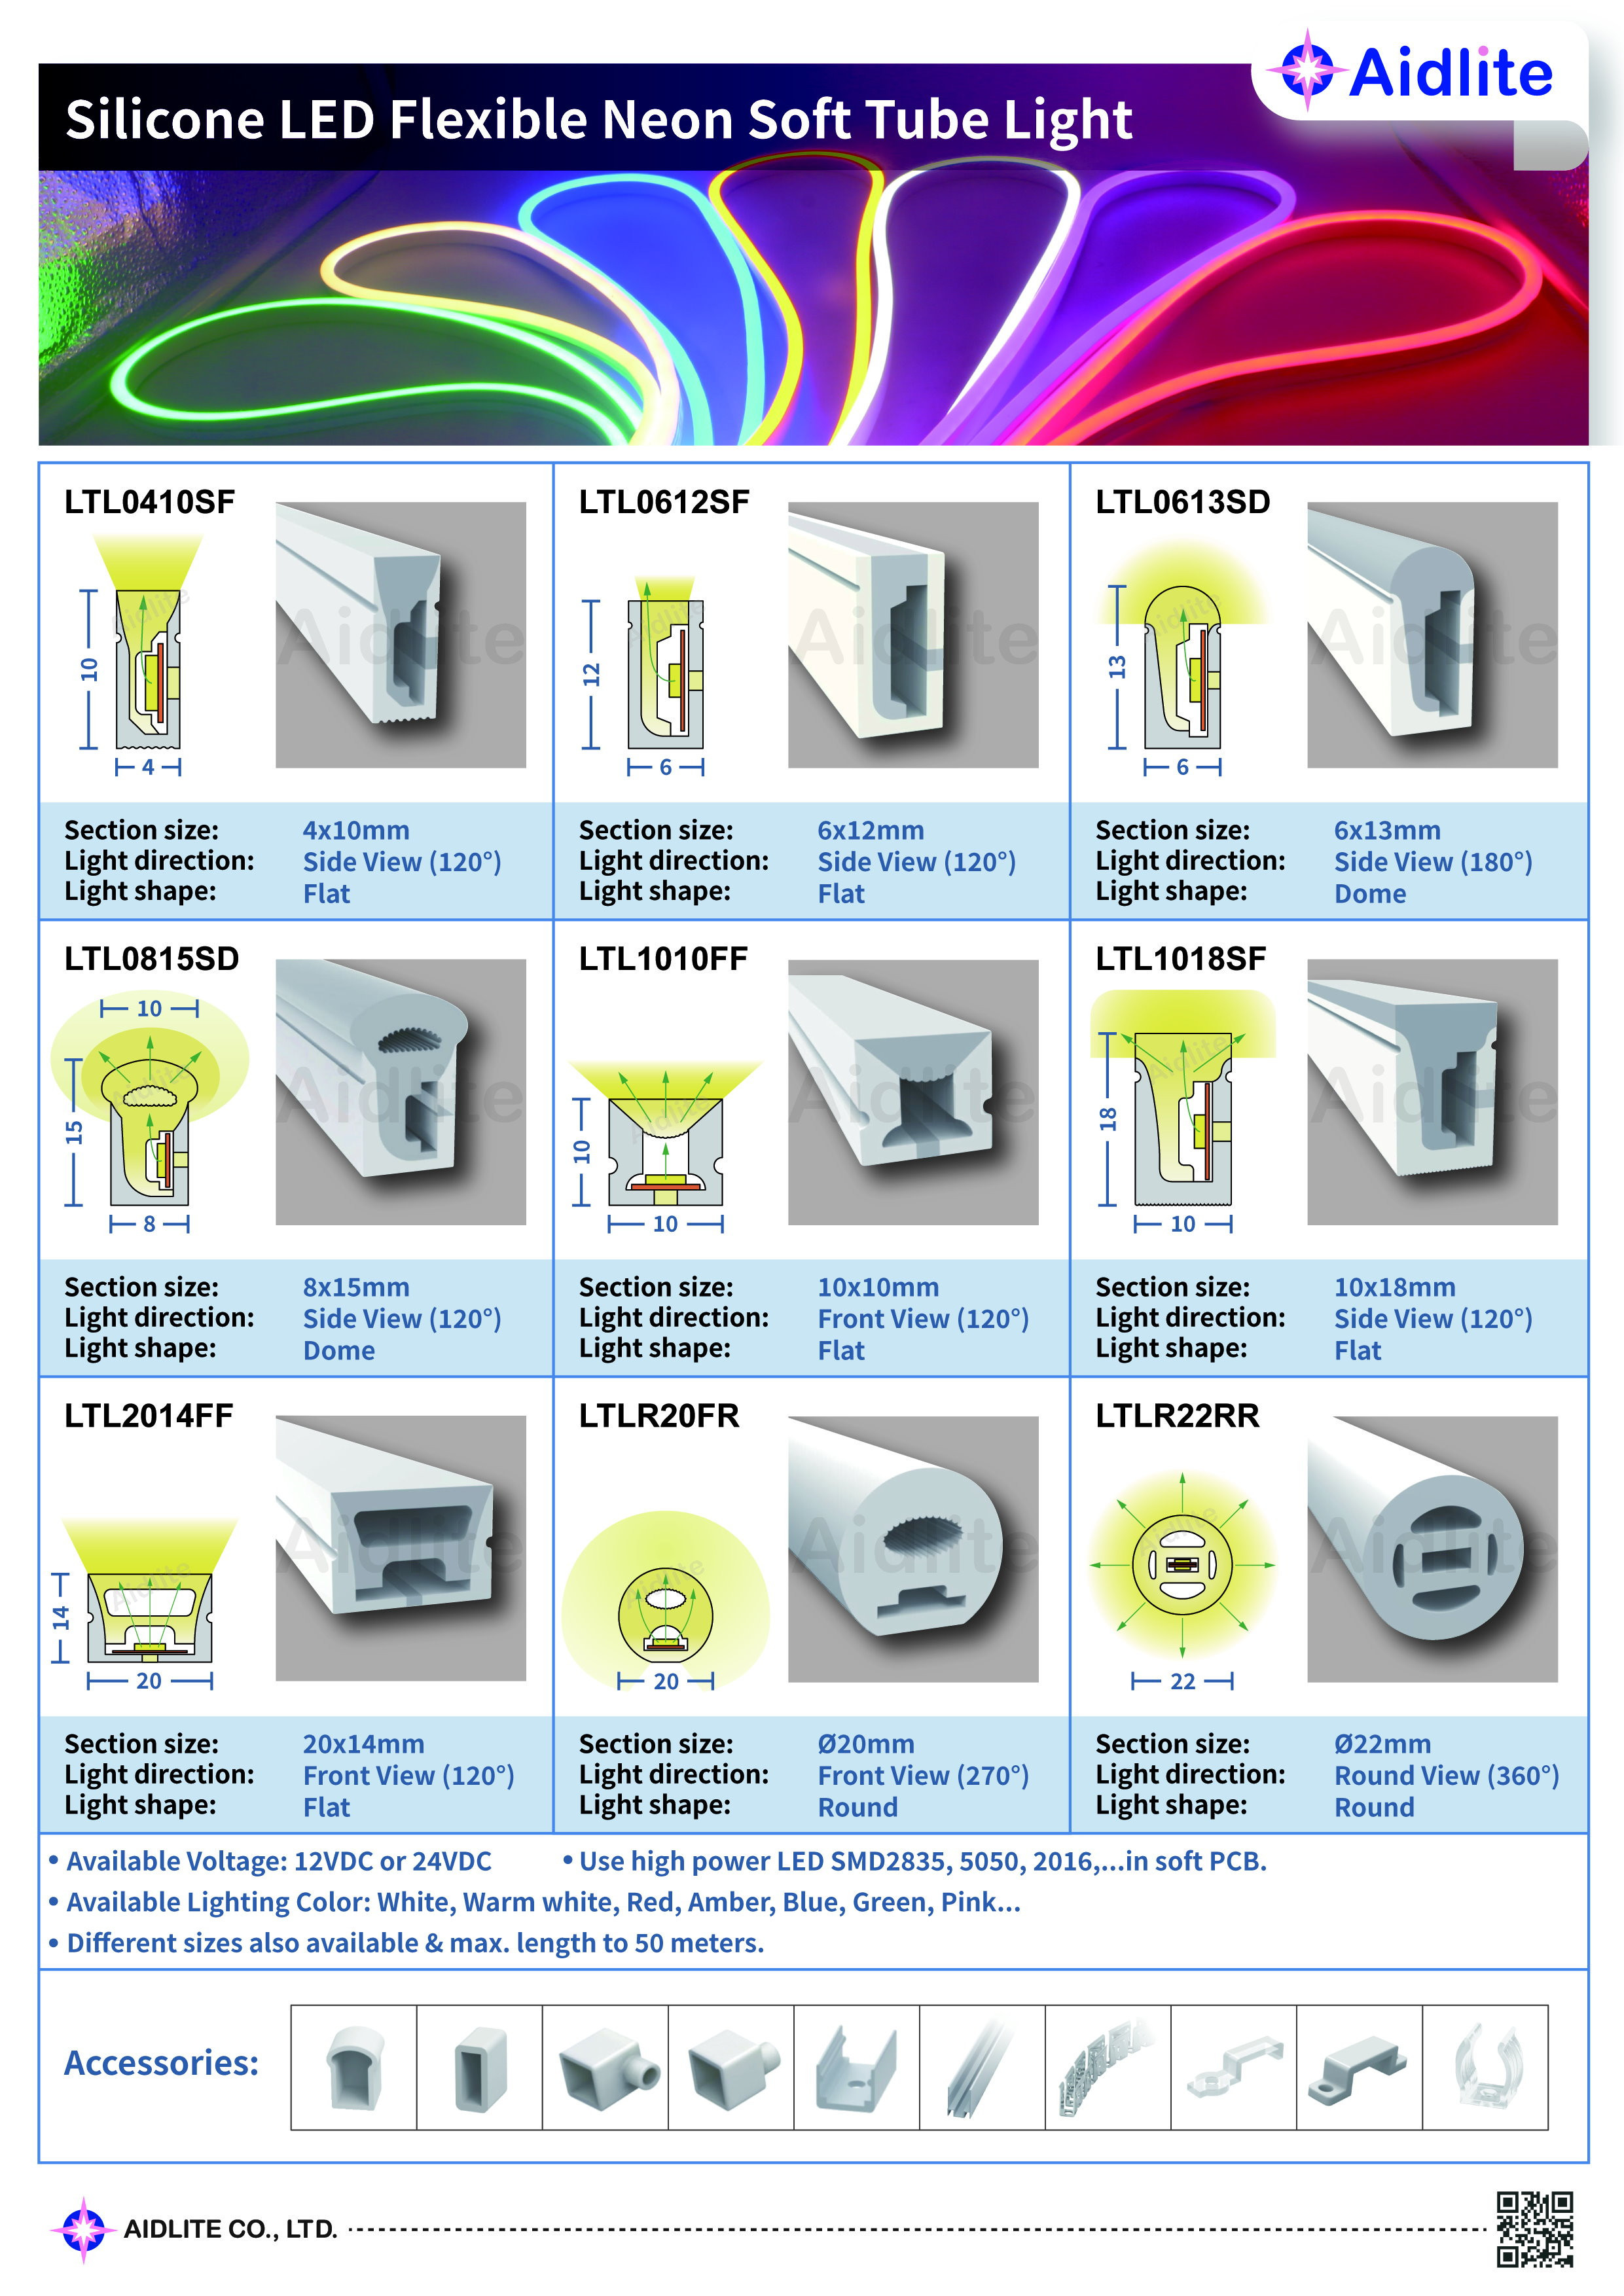 silicone LED flexible Neon tube light